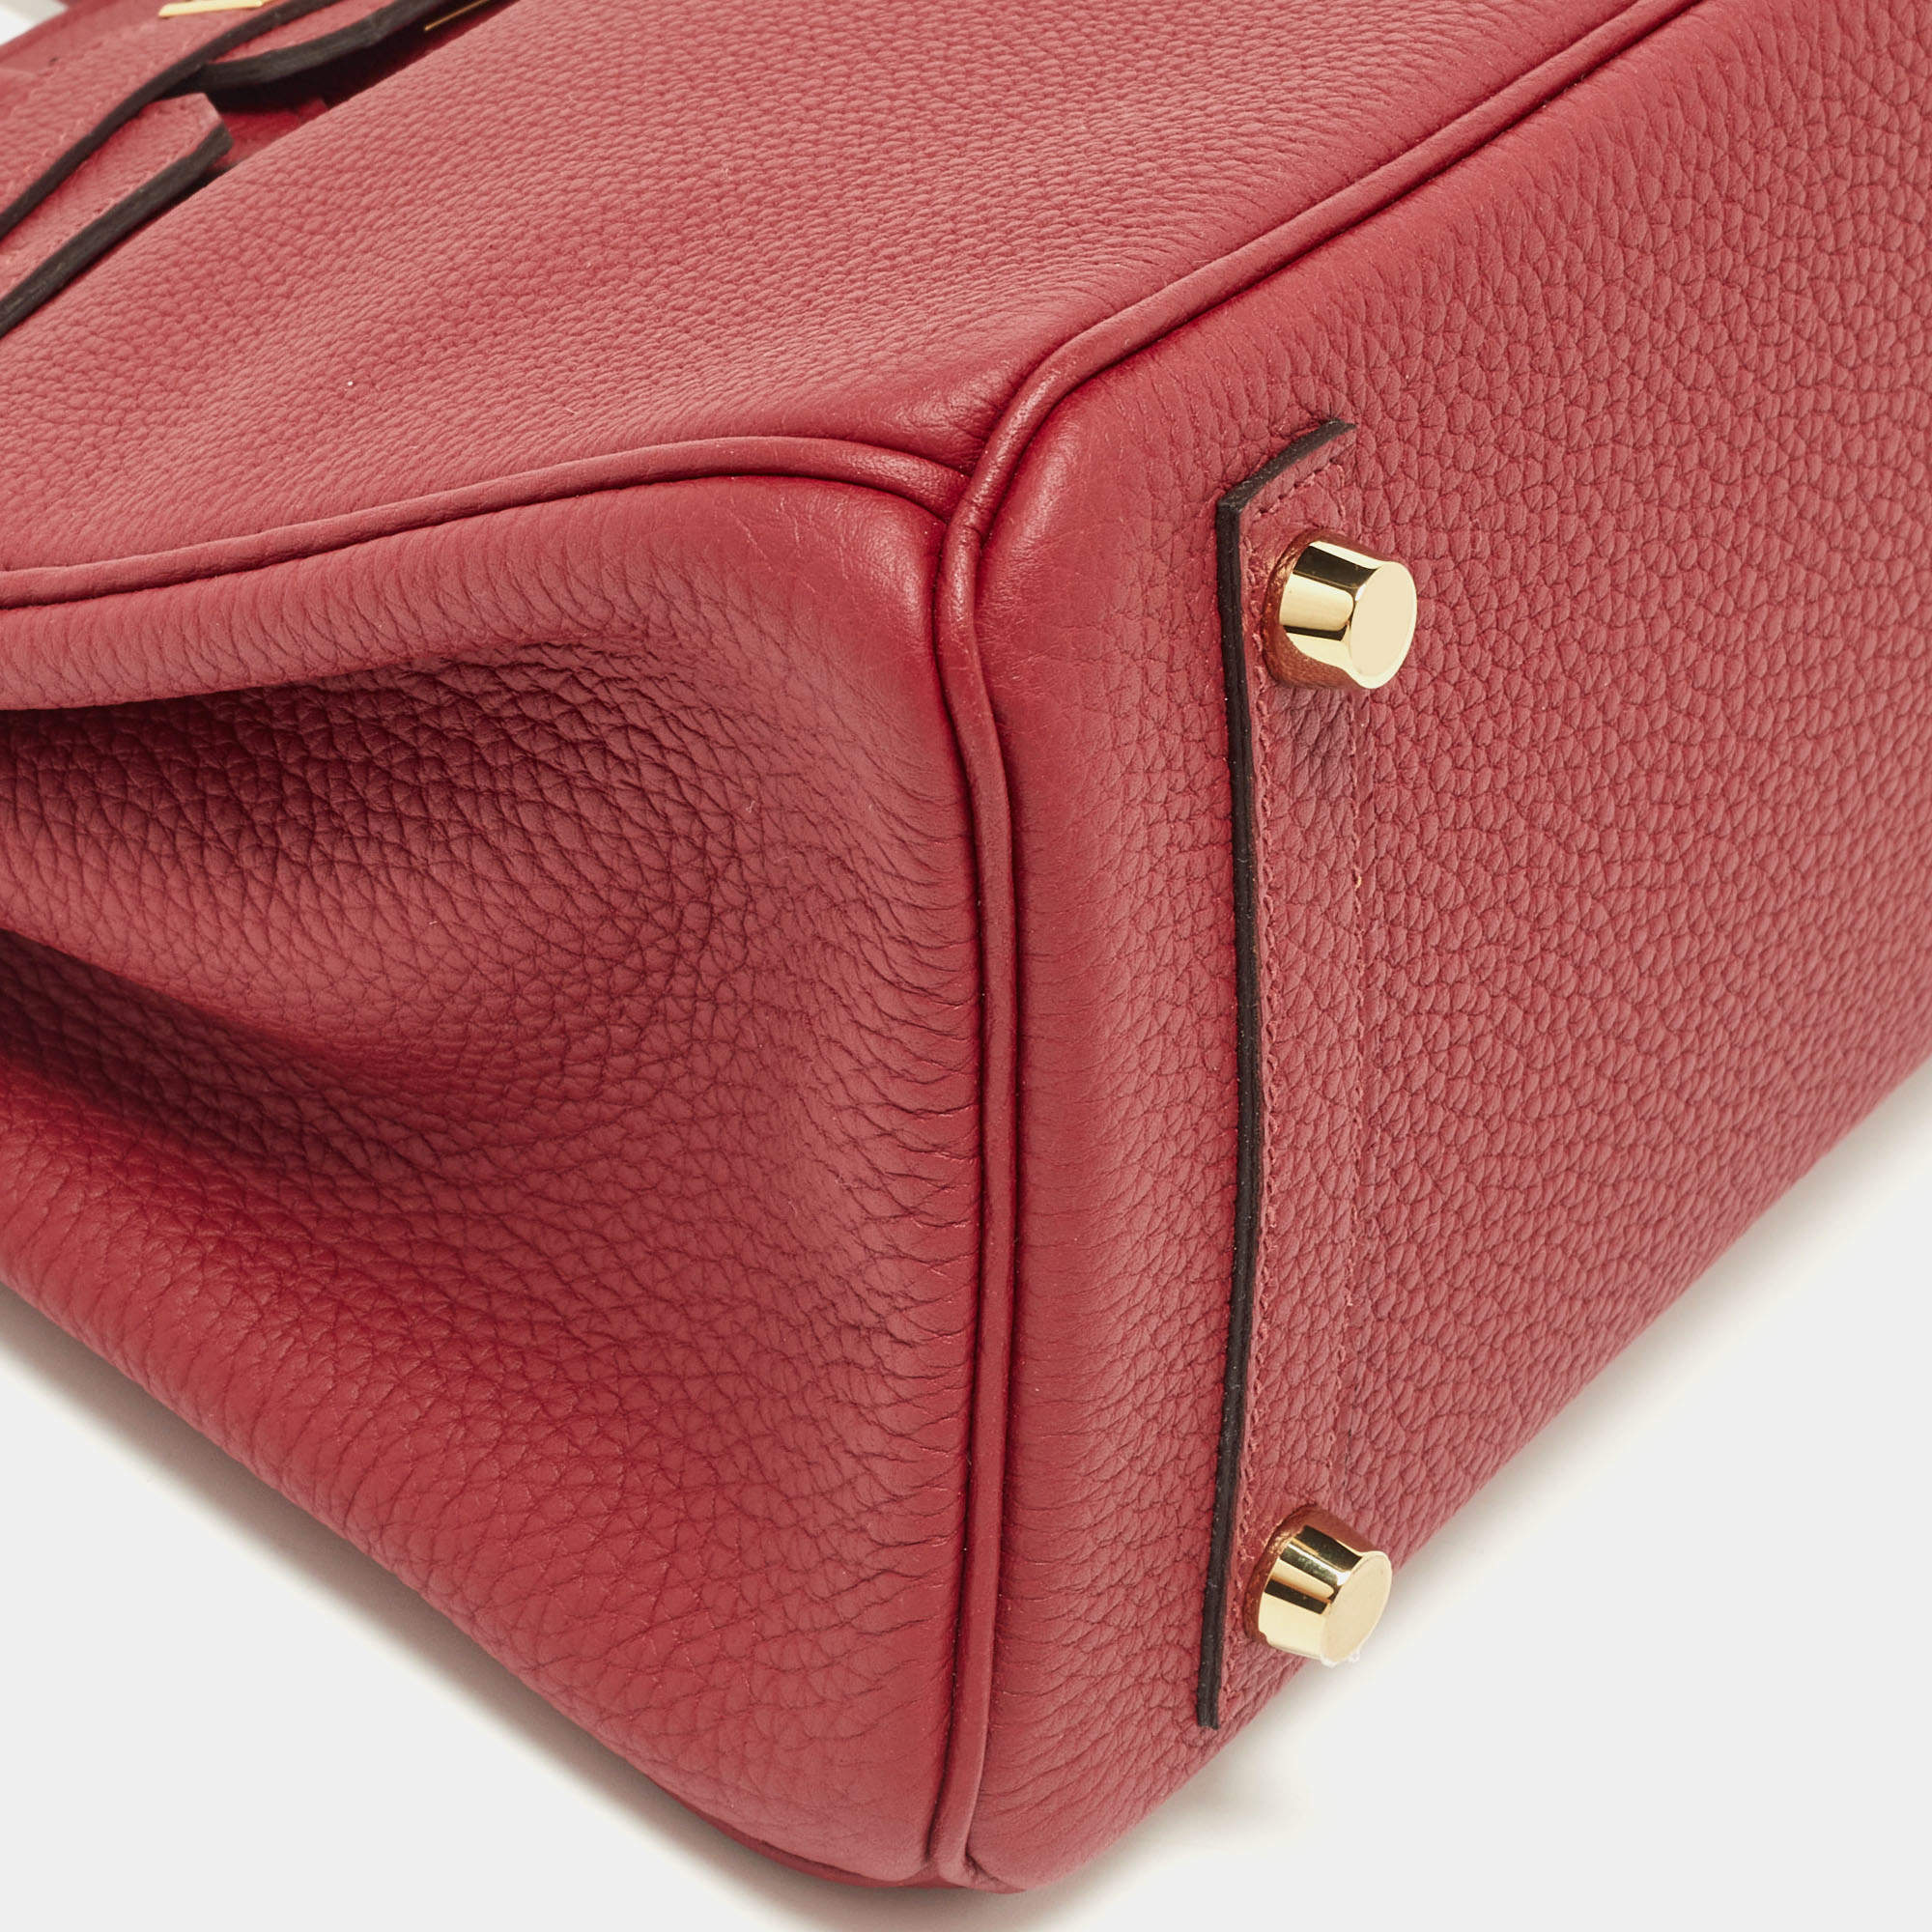 Hermès Birkin Rouge Grenat Togo Handbag